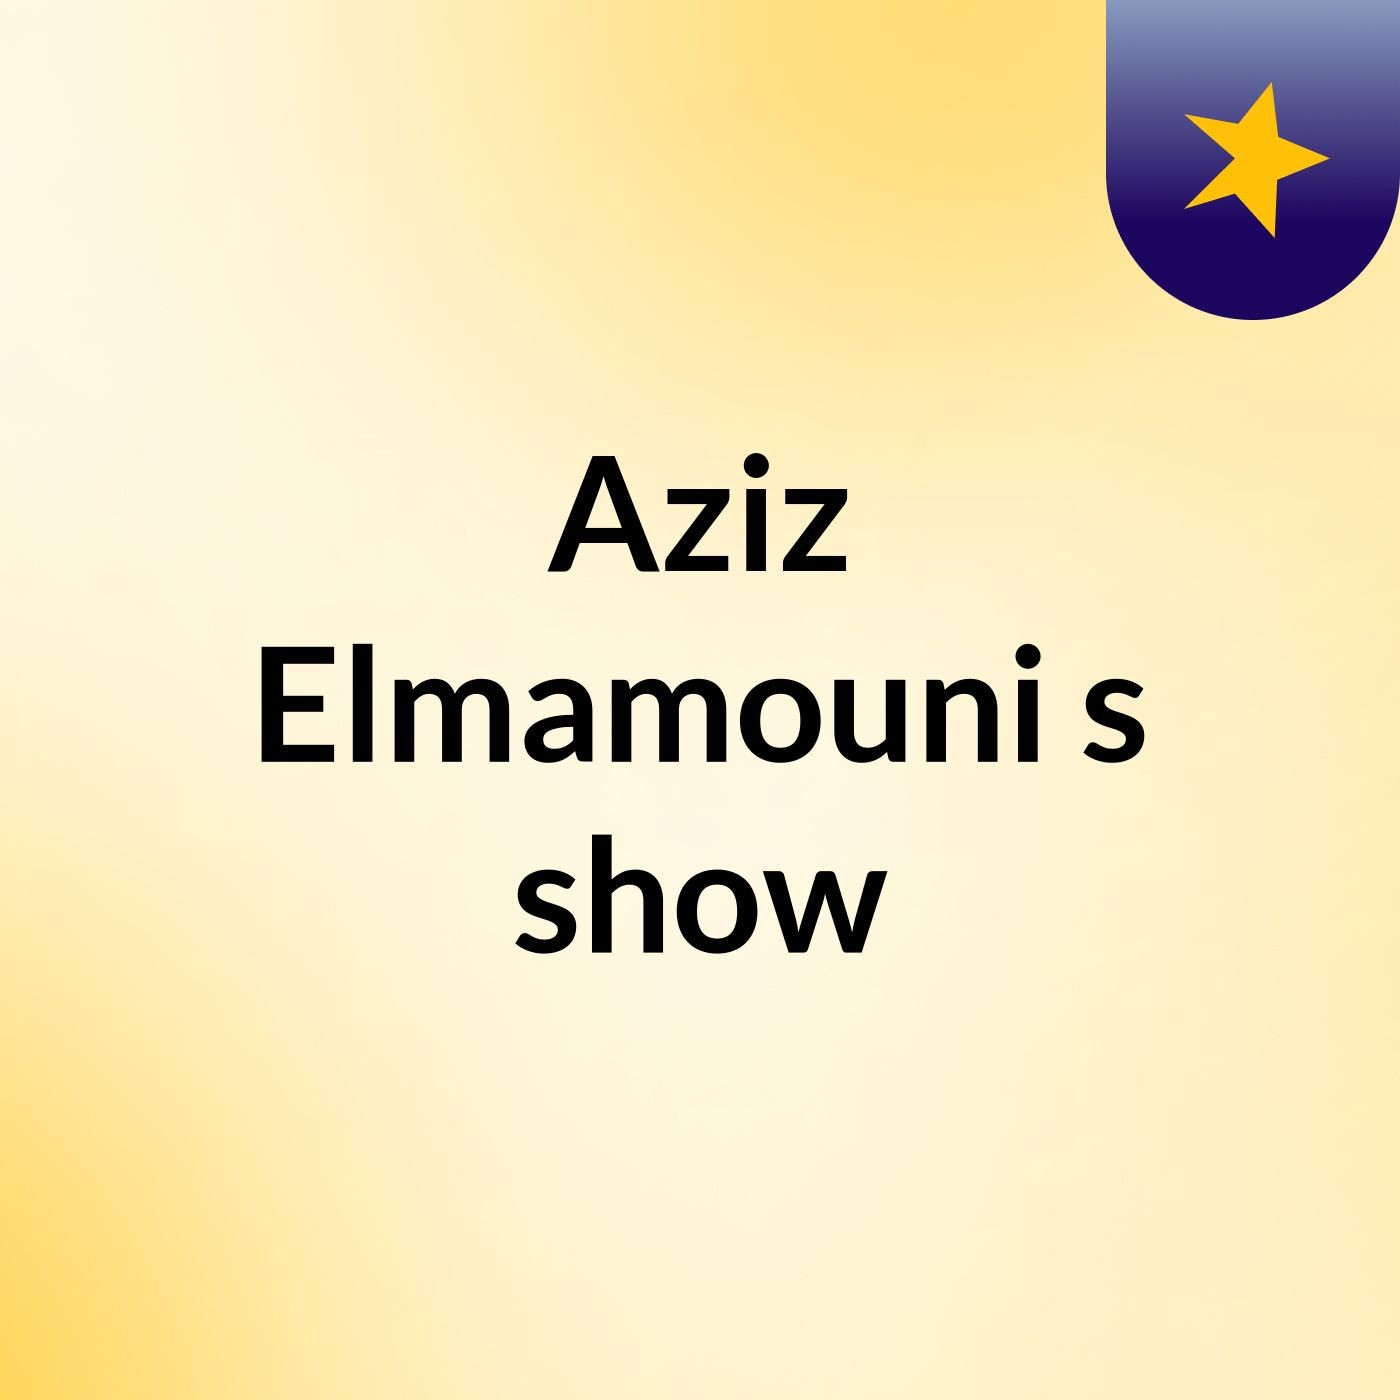 Aziz Elmamouni's show